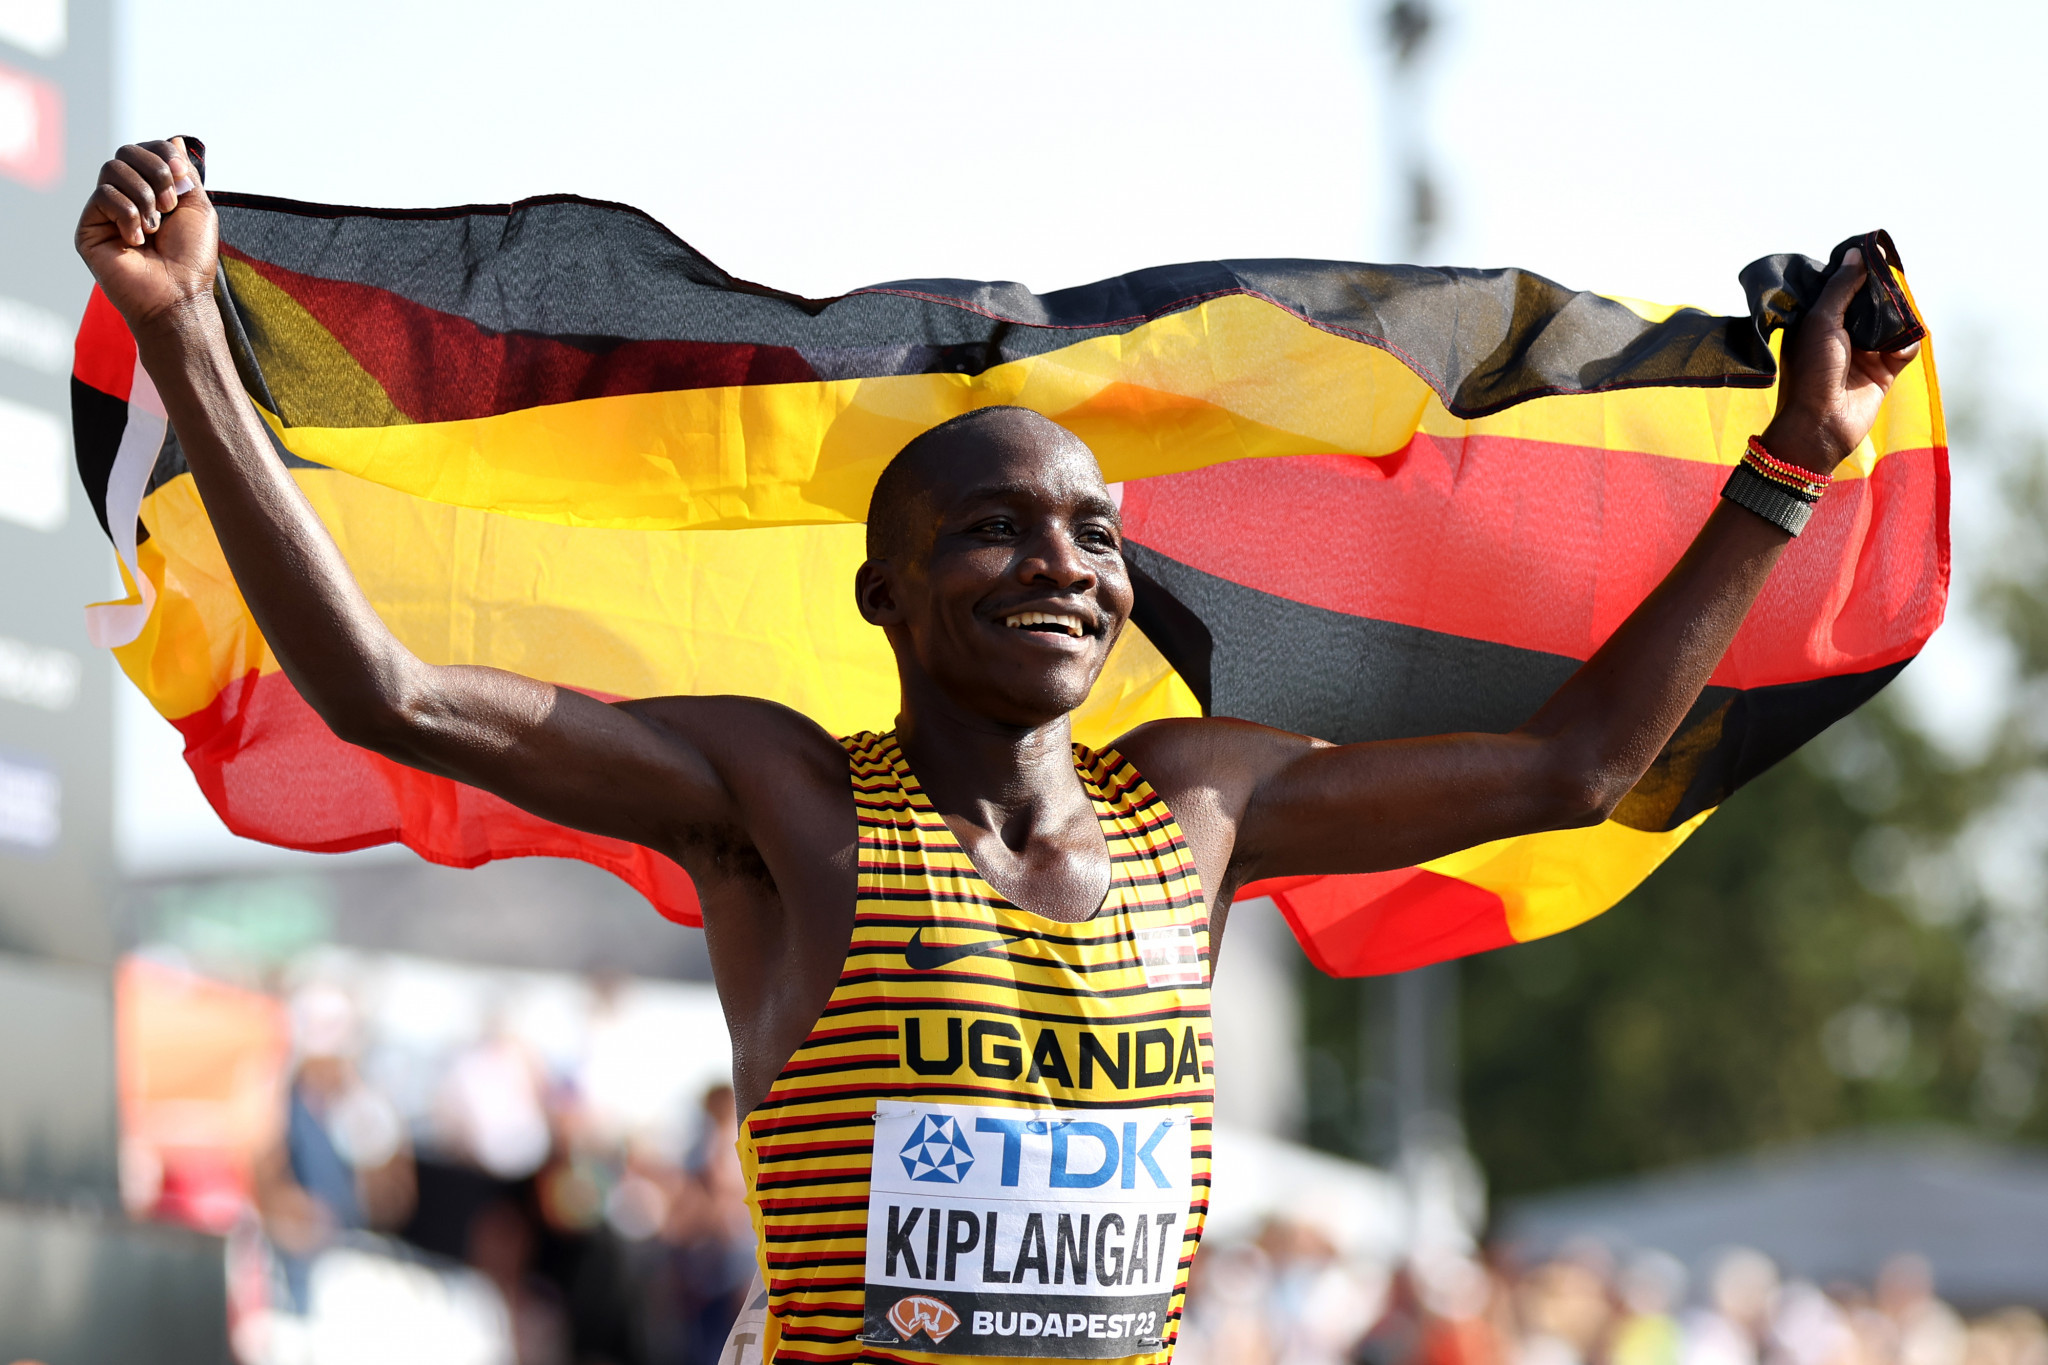 Uganda’s Kiplangat wins men’s World Athletics Championships marathon title - and targets Paris 2024